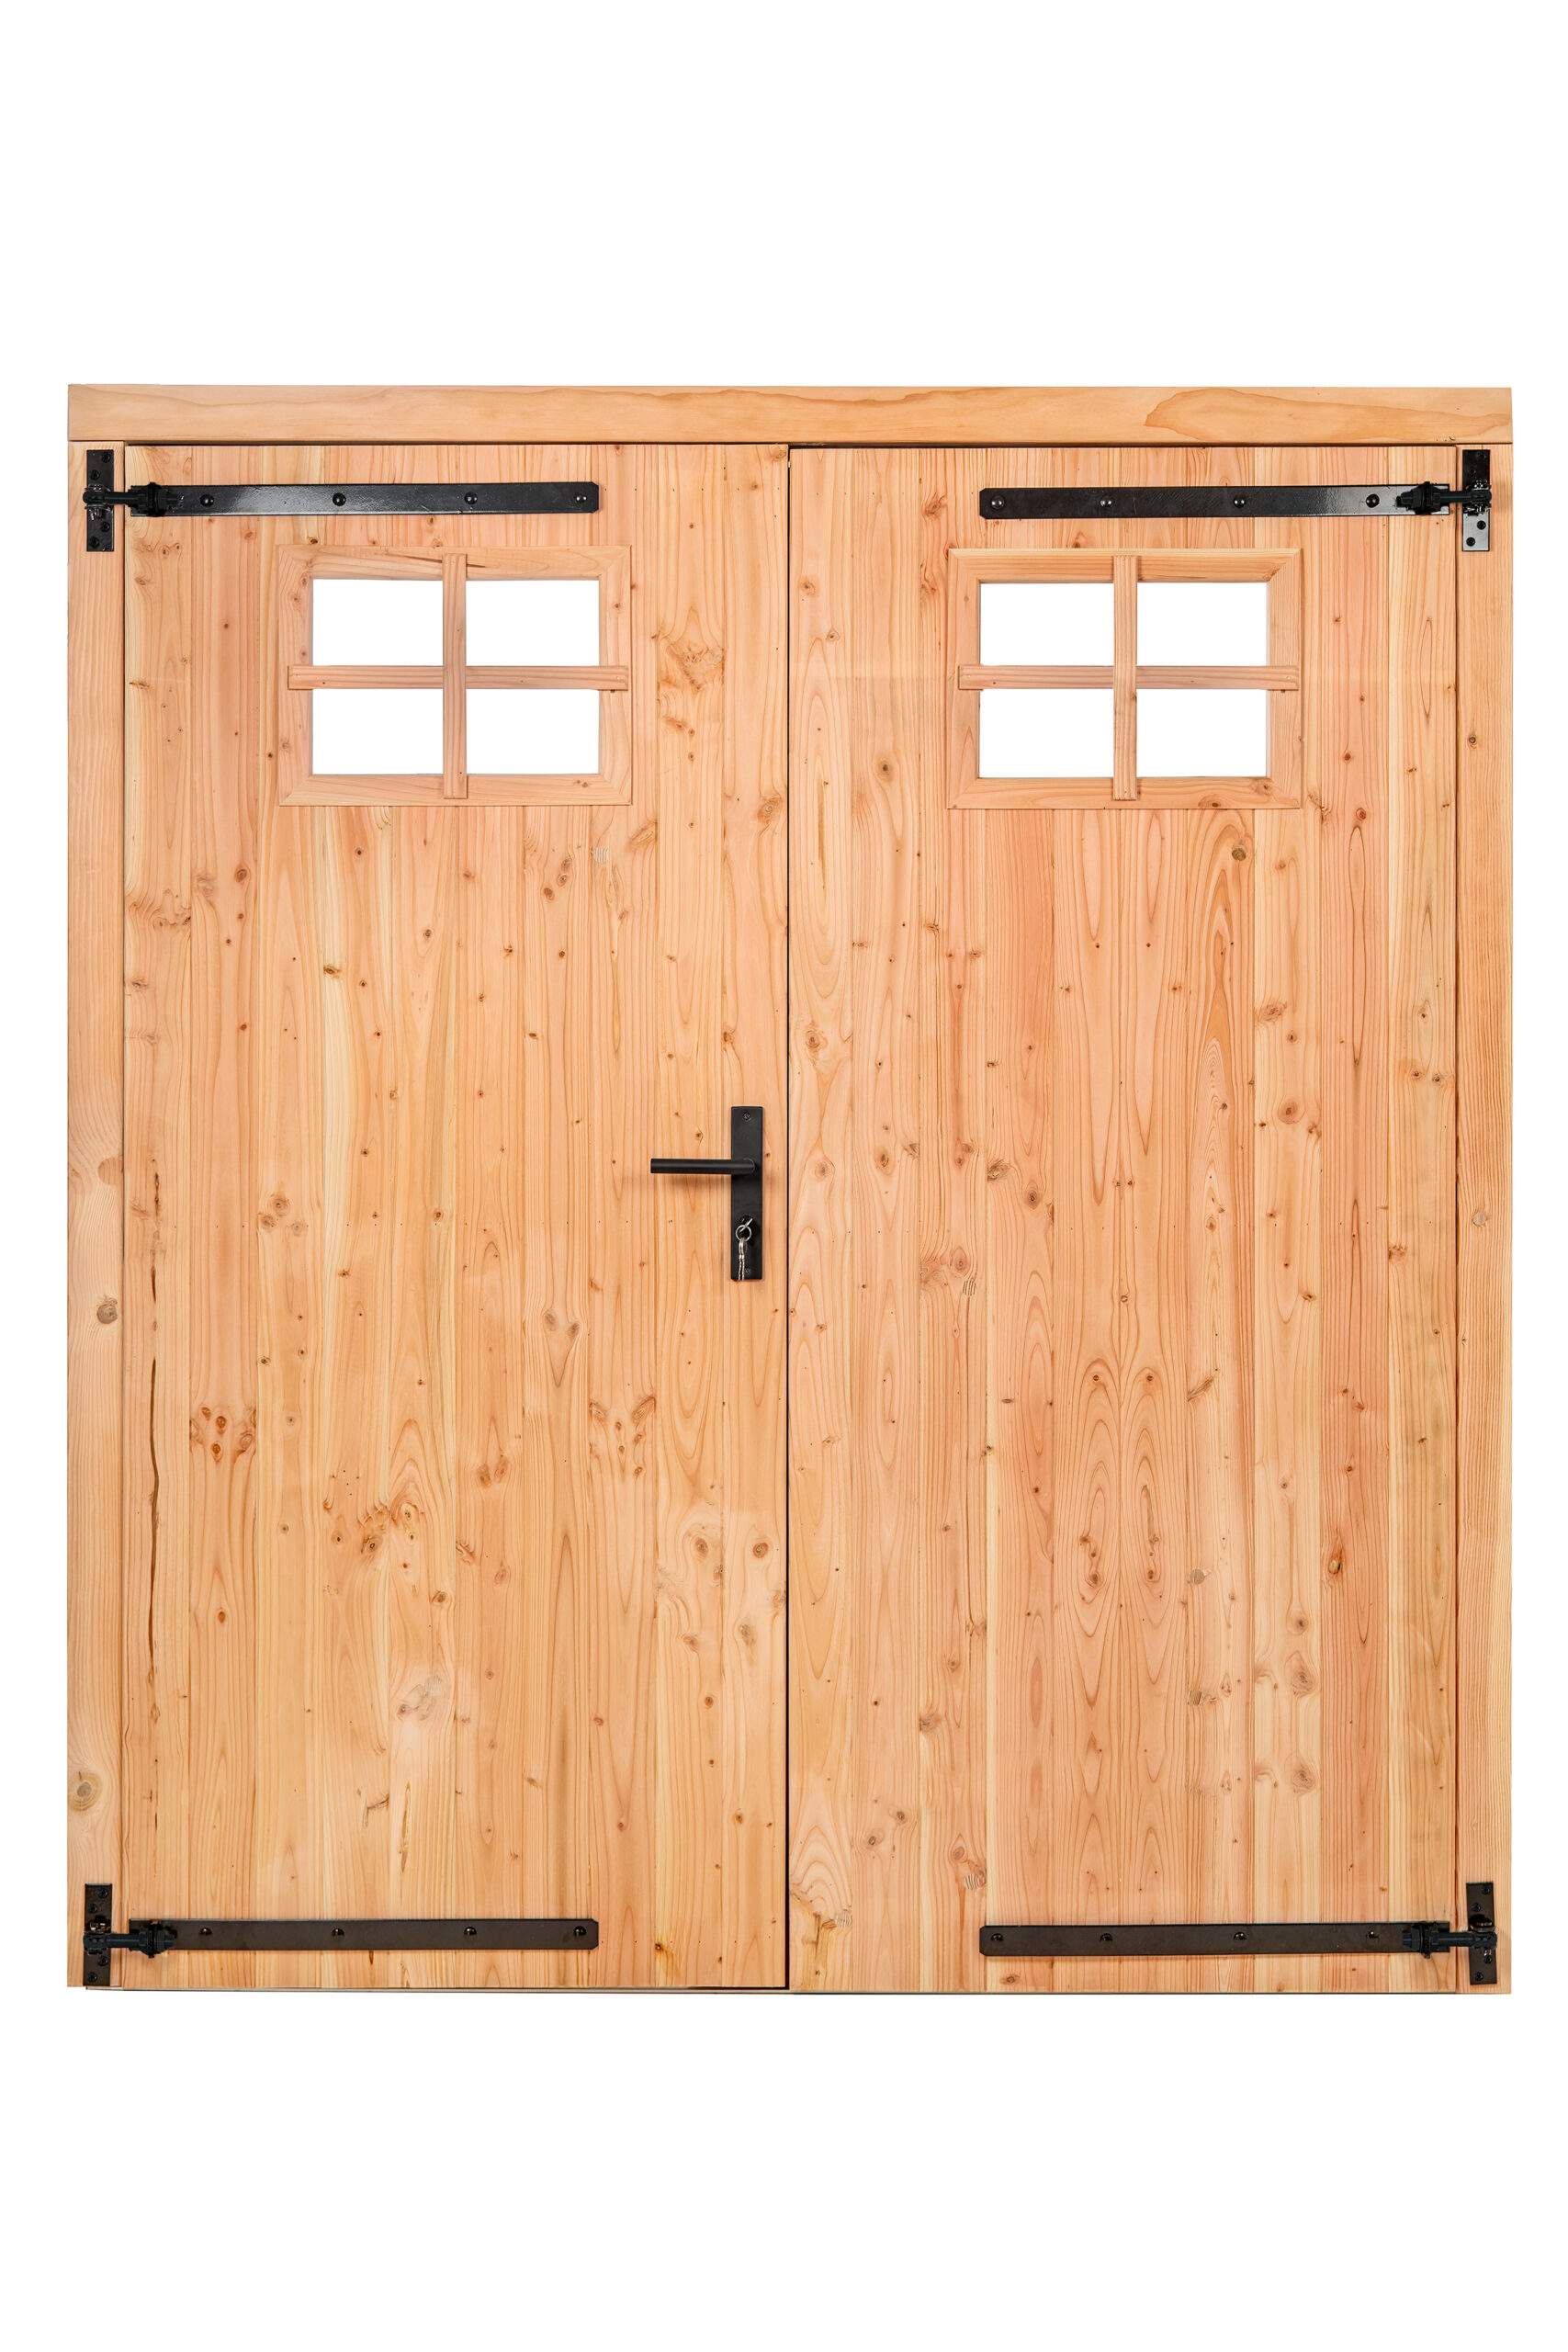 Douglas dubbele klampdeur met klein raam B1850xH2050mm buitenmaat, linksdraaiend